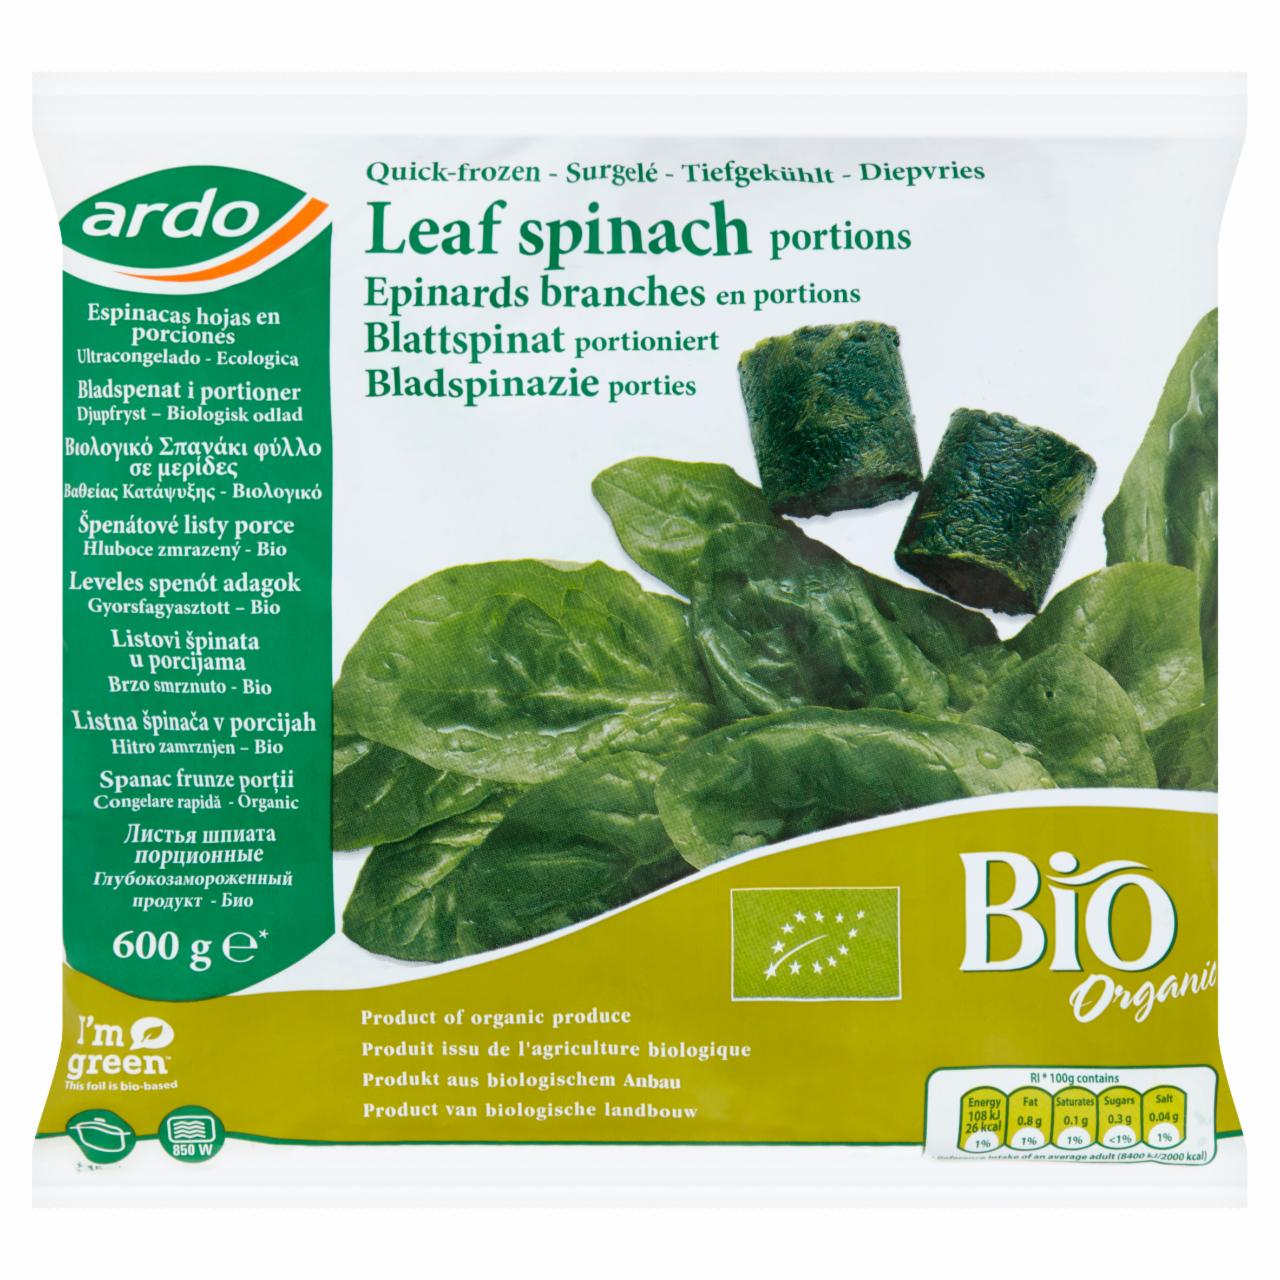 Fotografie - Leaf spinach portions (špenátové listy porce) Ardo